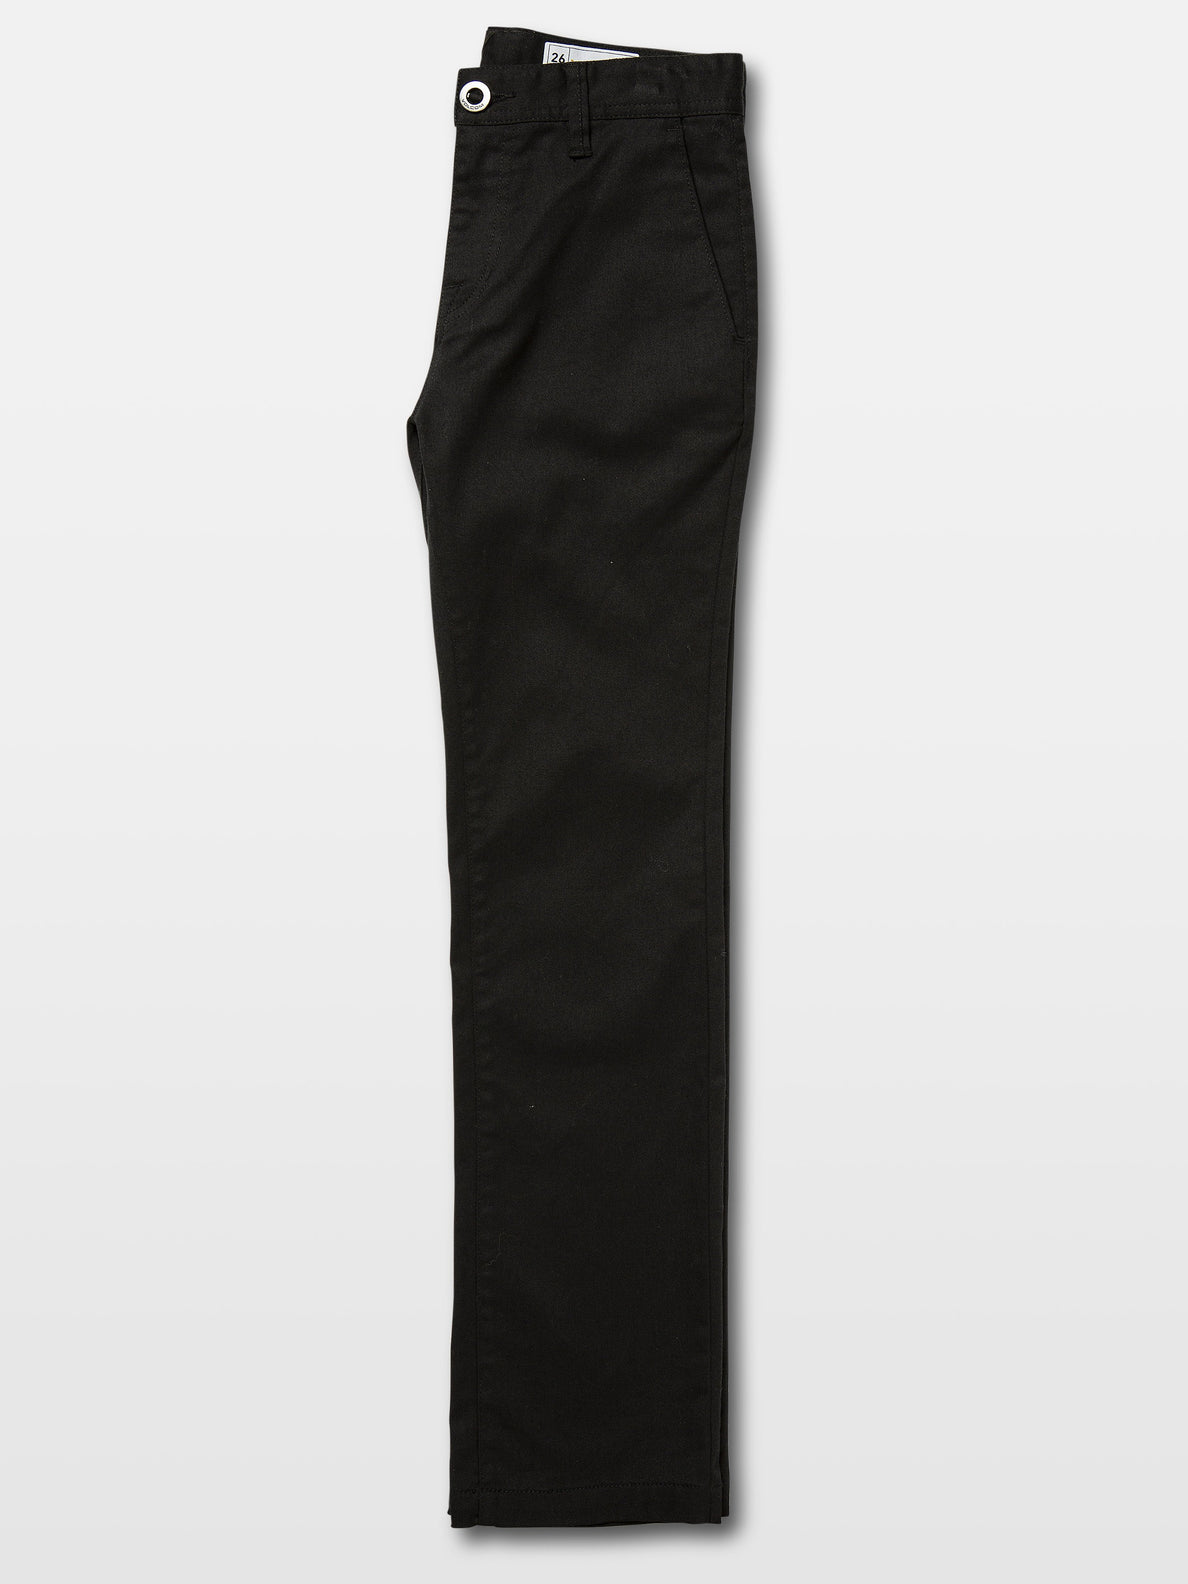 Frickin Modern Stretch Chino Pant - BLACK - (BOYS)